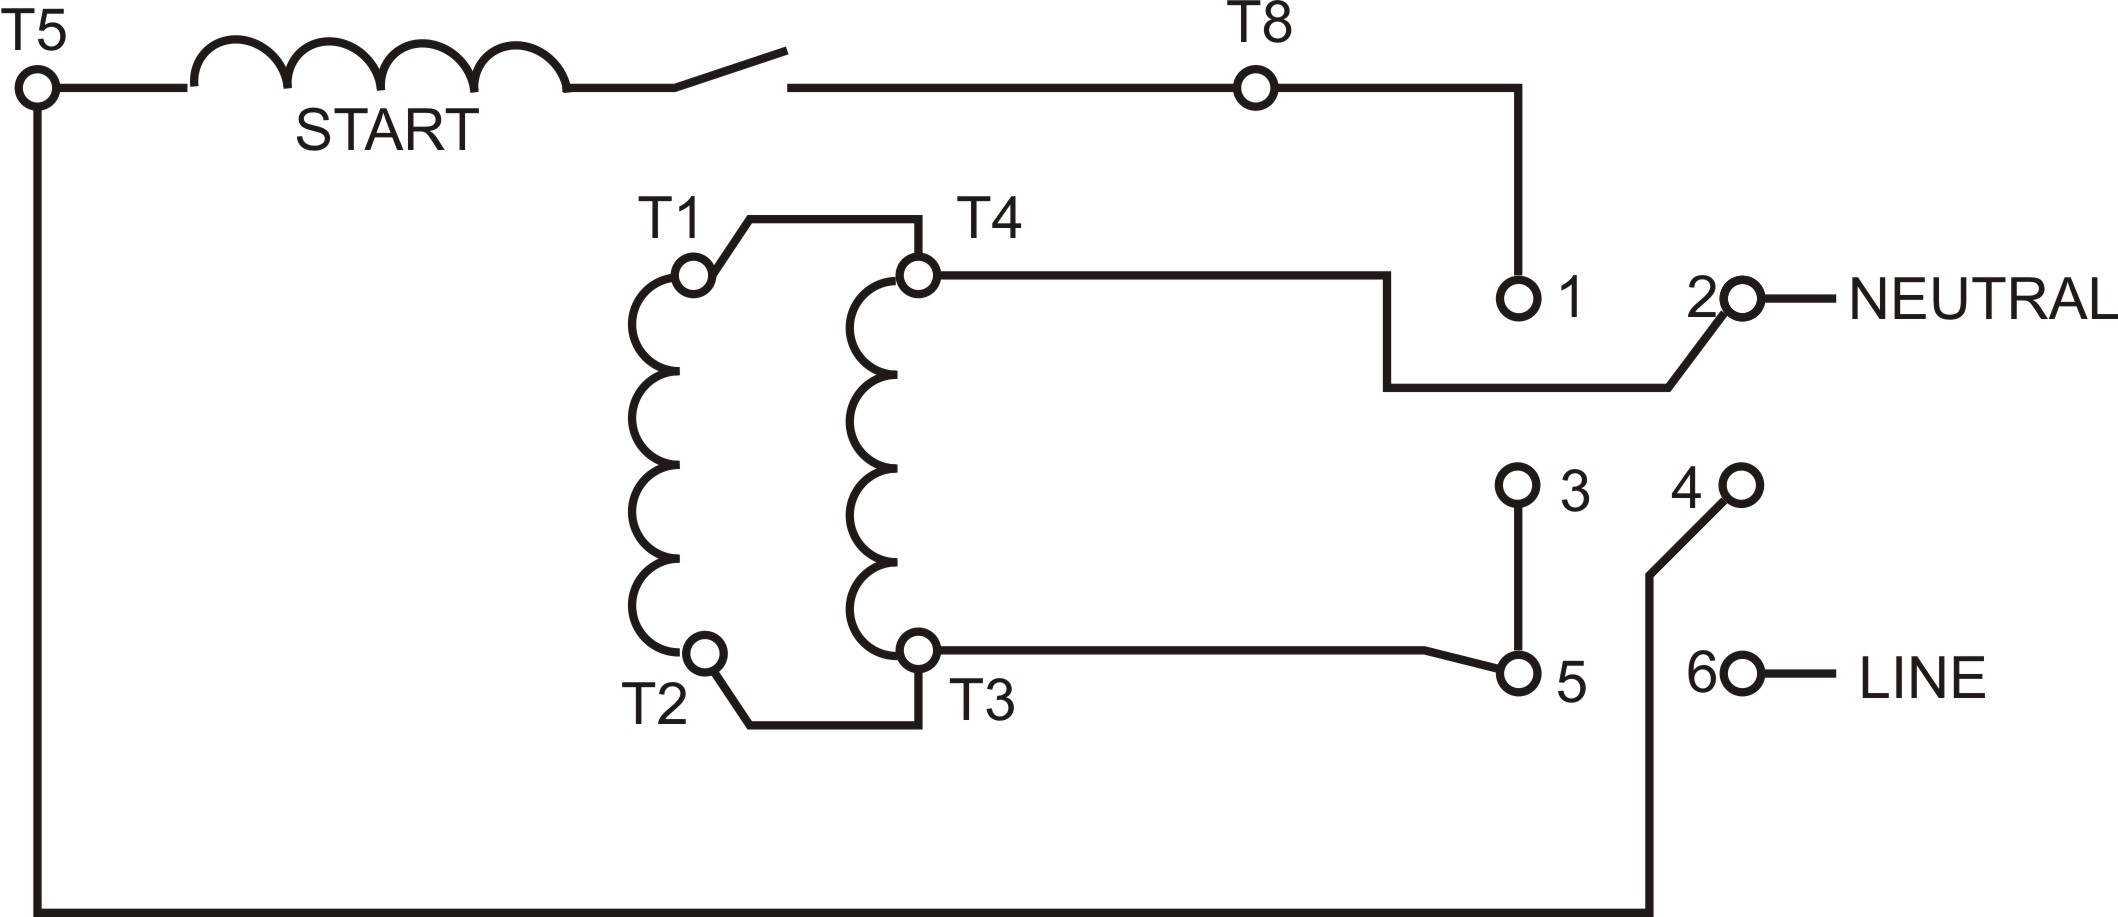 electric motor wiring diagrams trusted wiring diagrams rh web vet co